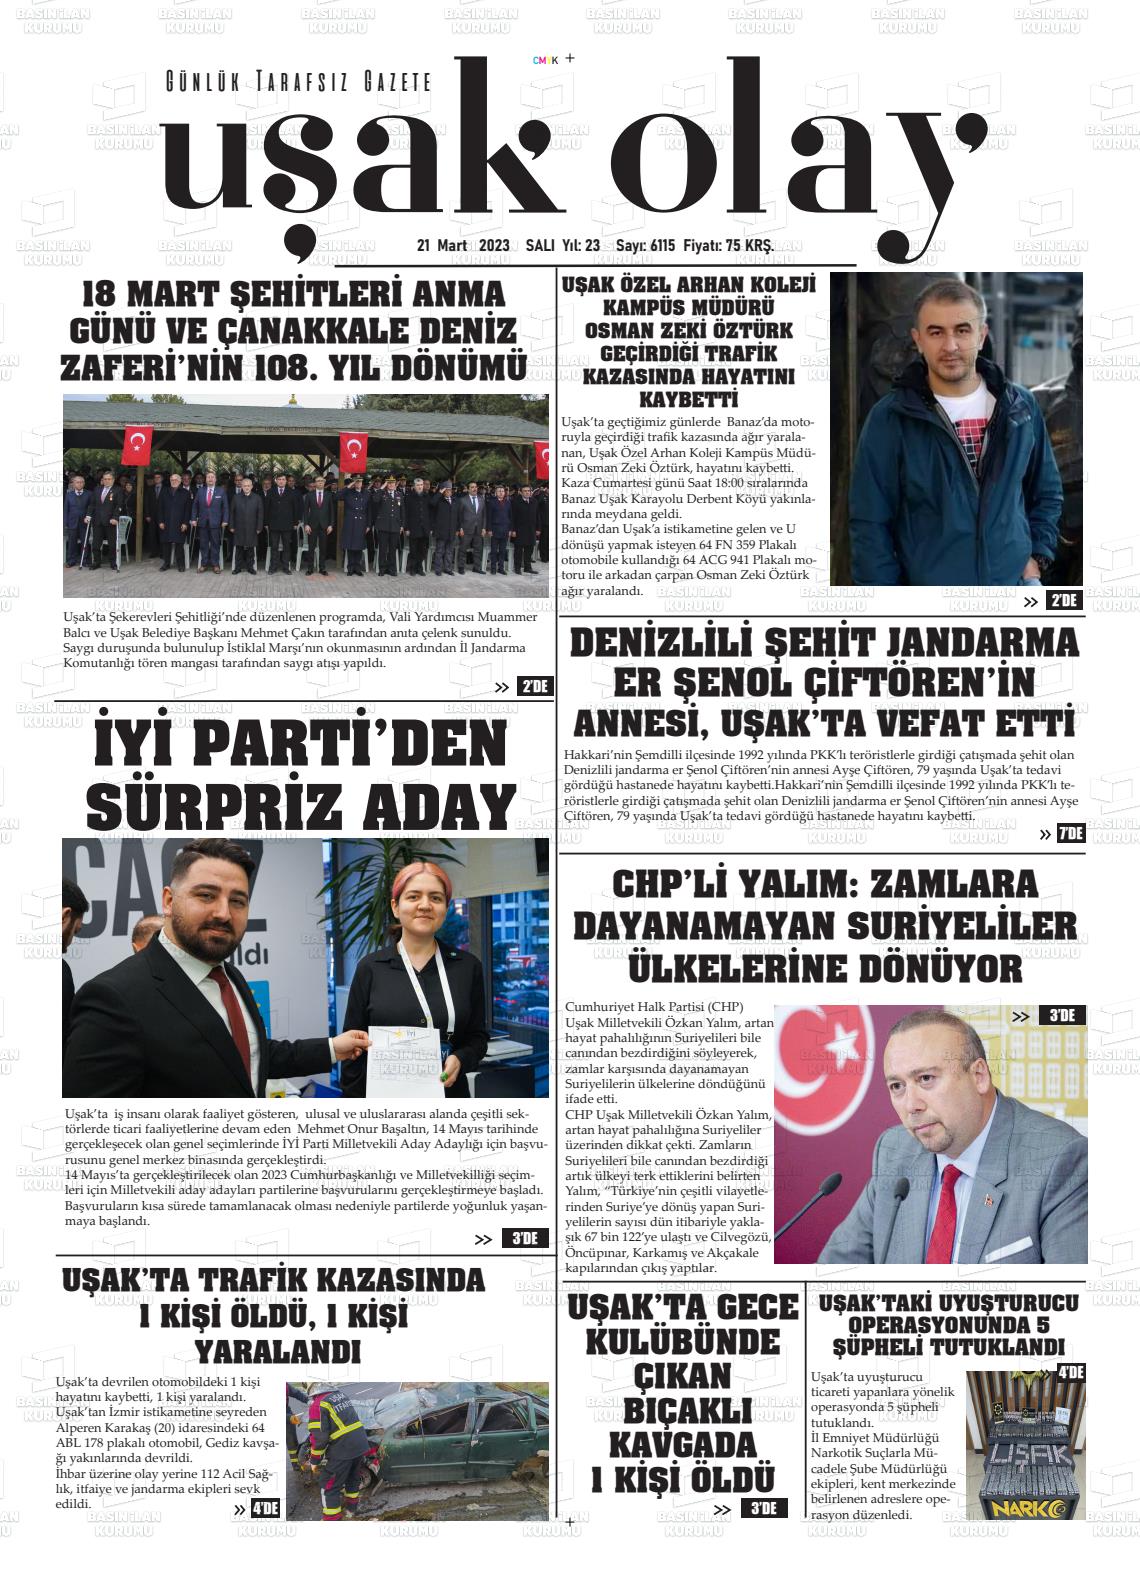 21 Mart 2023 Uşak Olay Gazete Manşeti